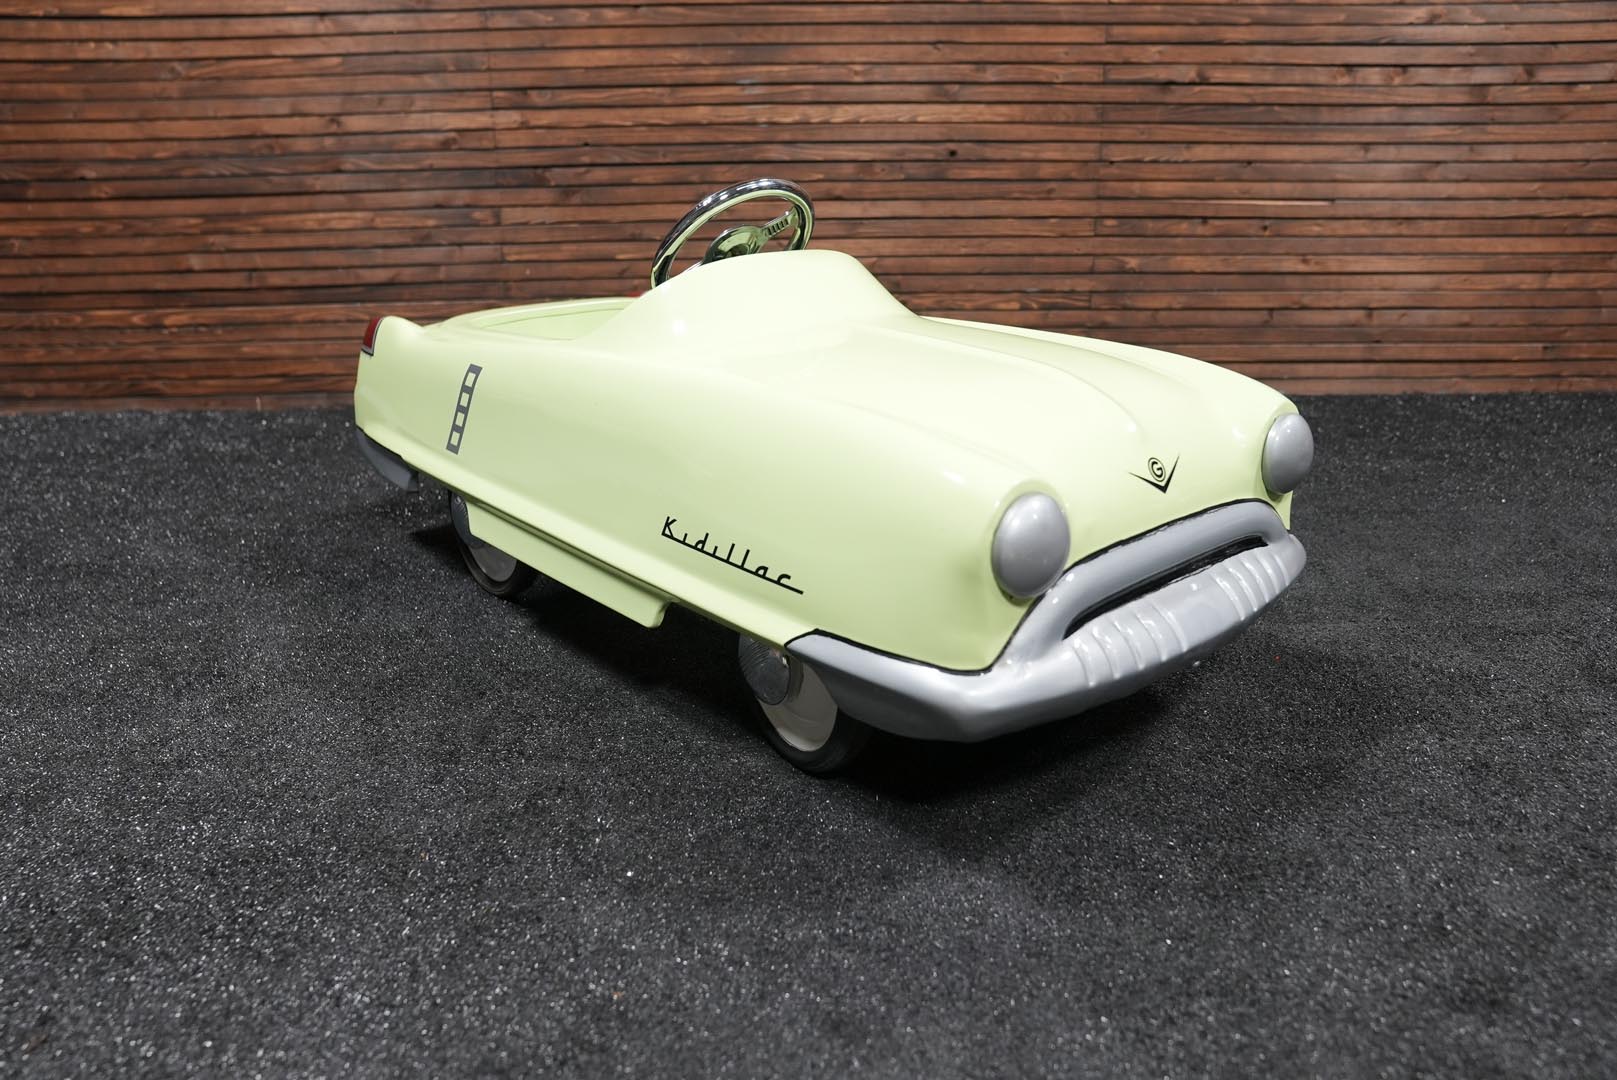  1953 Garton Kidillac Pedal Car - Restored 